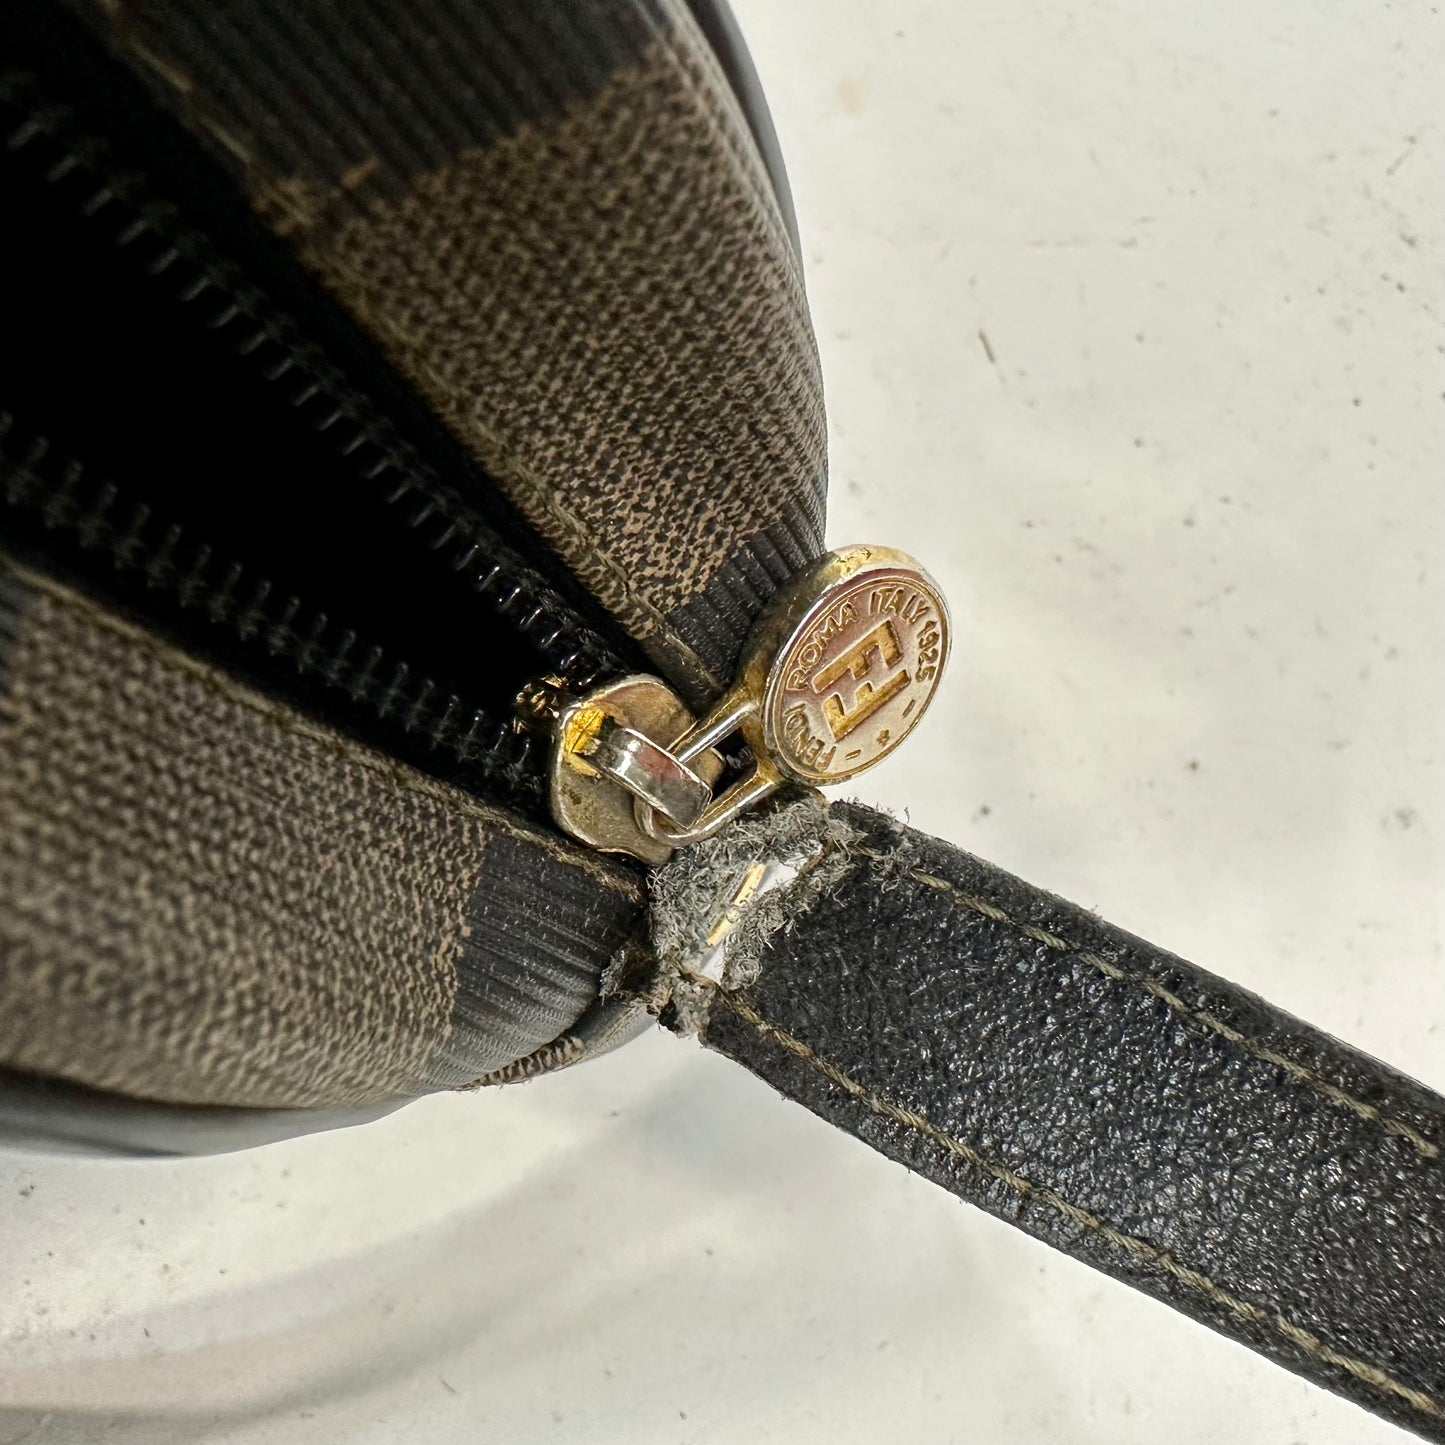 Vintage Fendi Pequin Striped Crossbody Bag